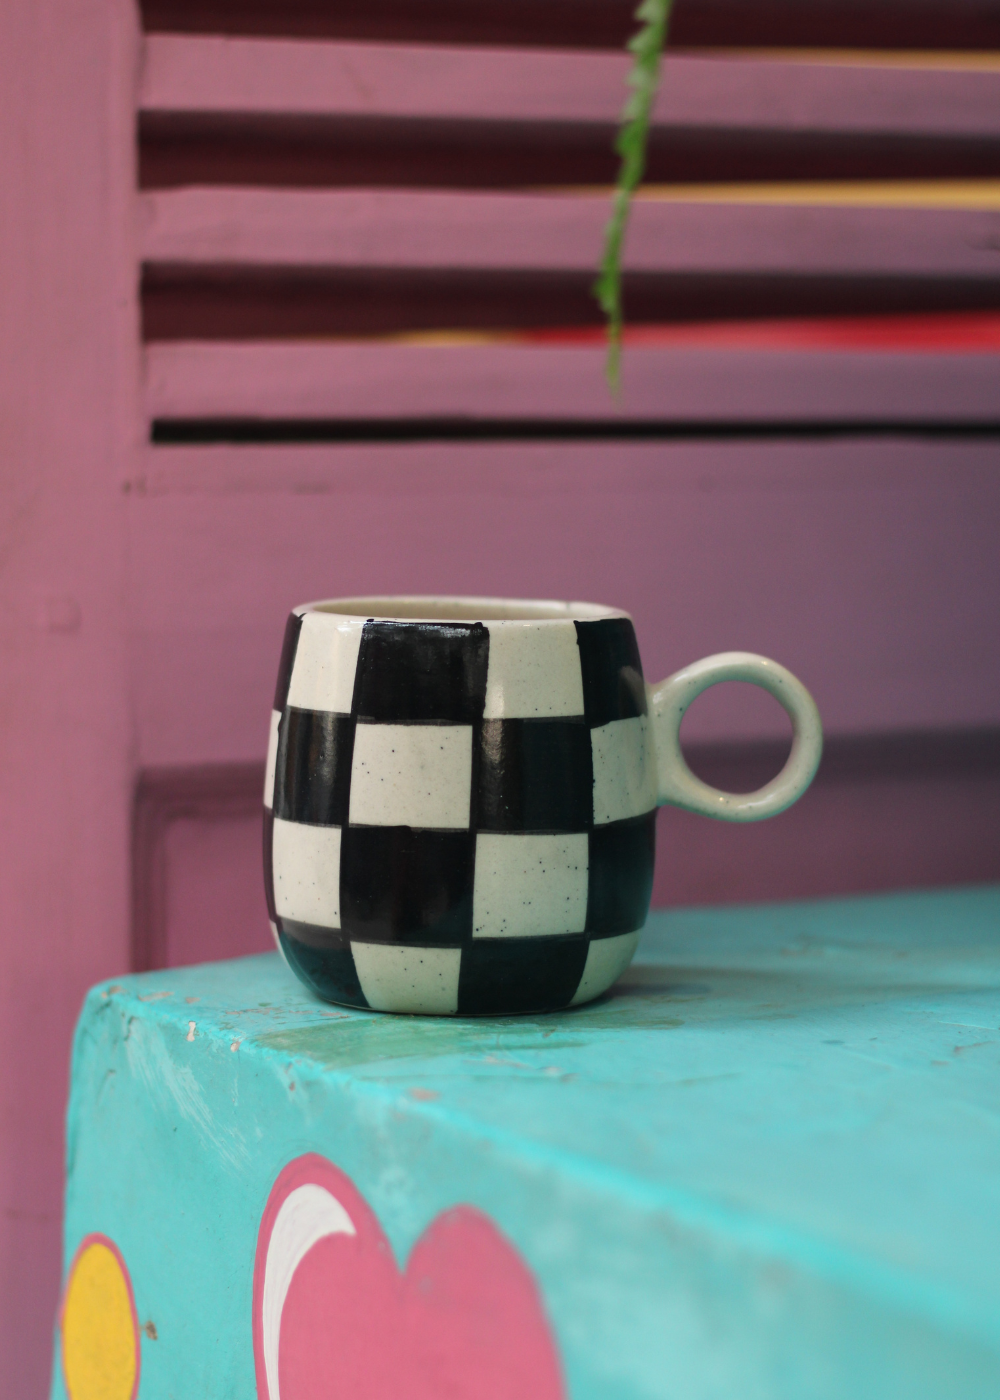 Black & white chess mug on table